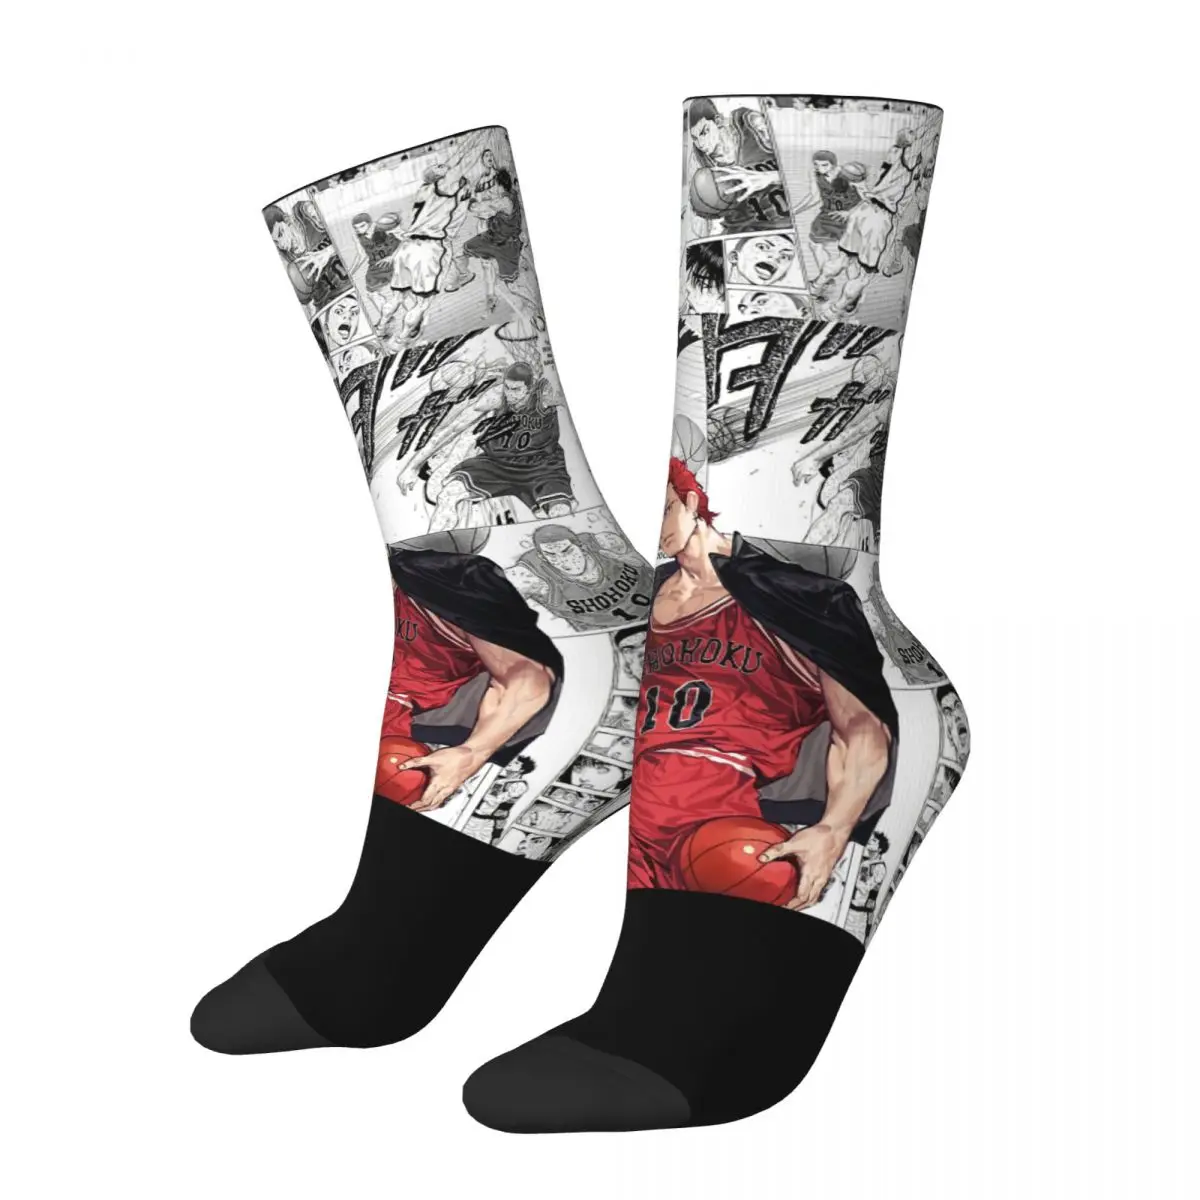 

Happy Funny Men's compression Socks Hanamichi Sakuragi Retro Harajuku Slamdunk Hip Hop Novelty Pattern Crew Sock Gift Printed